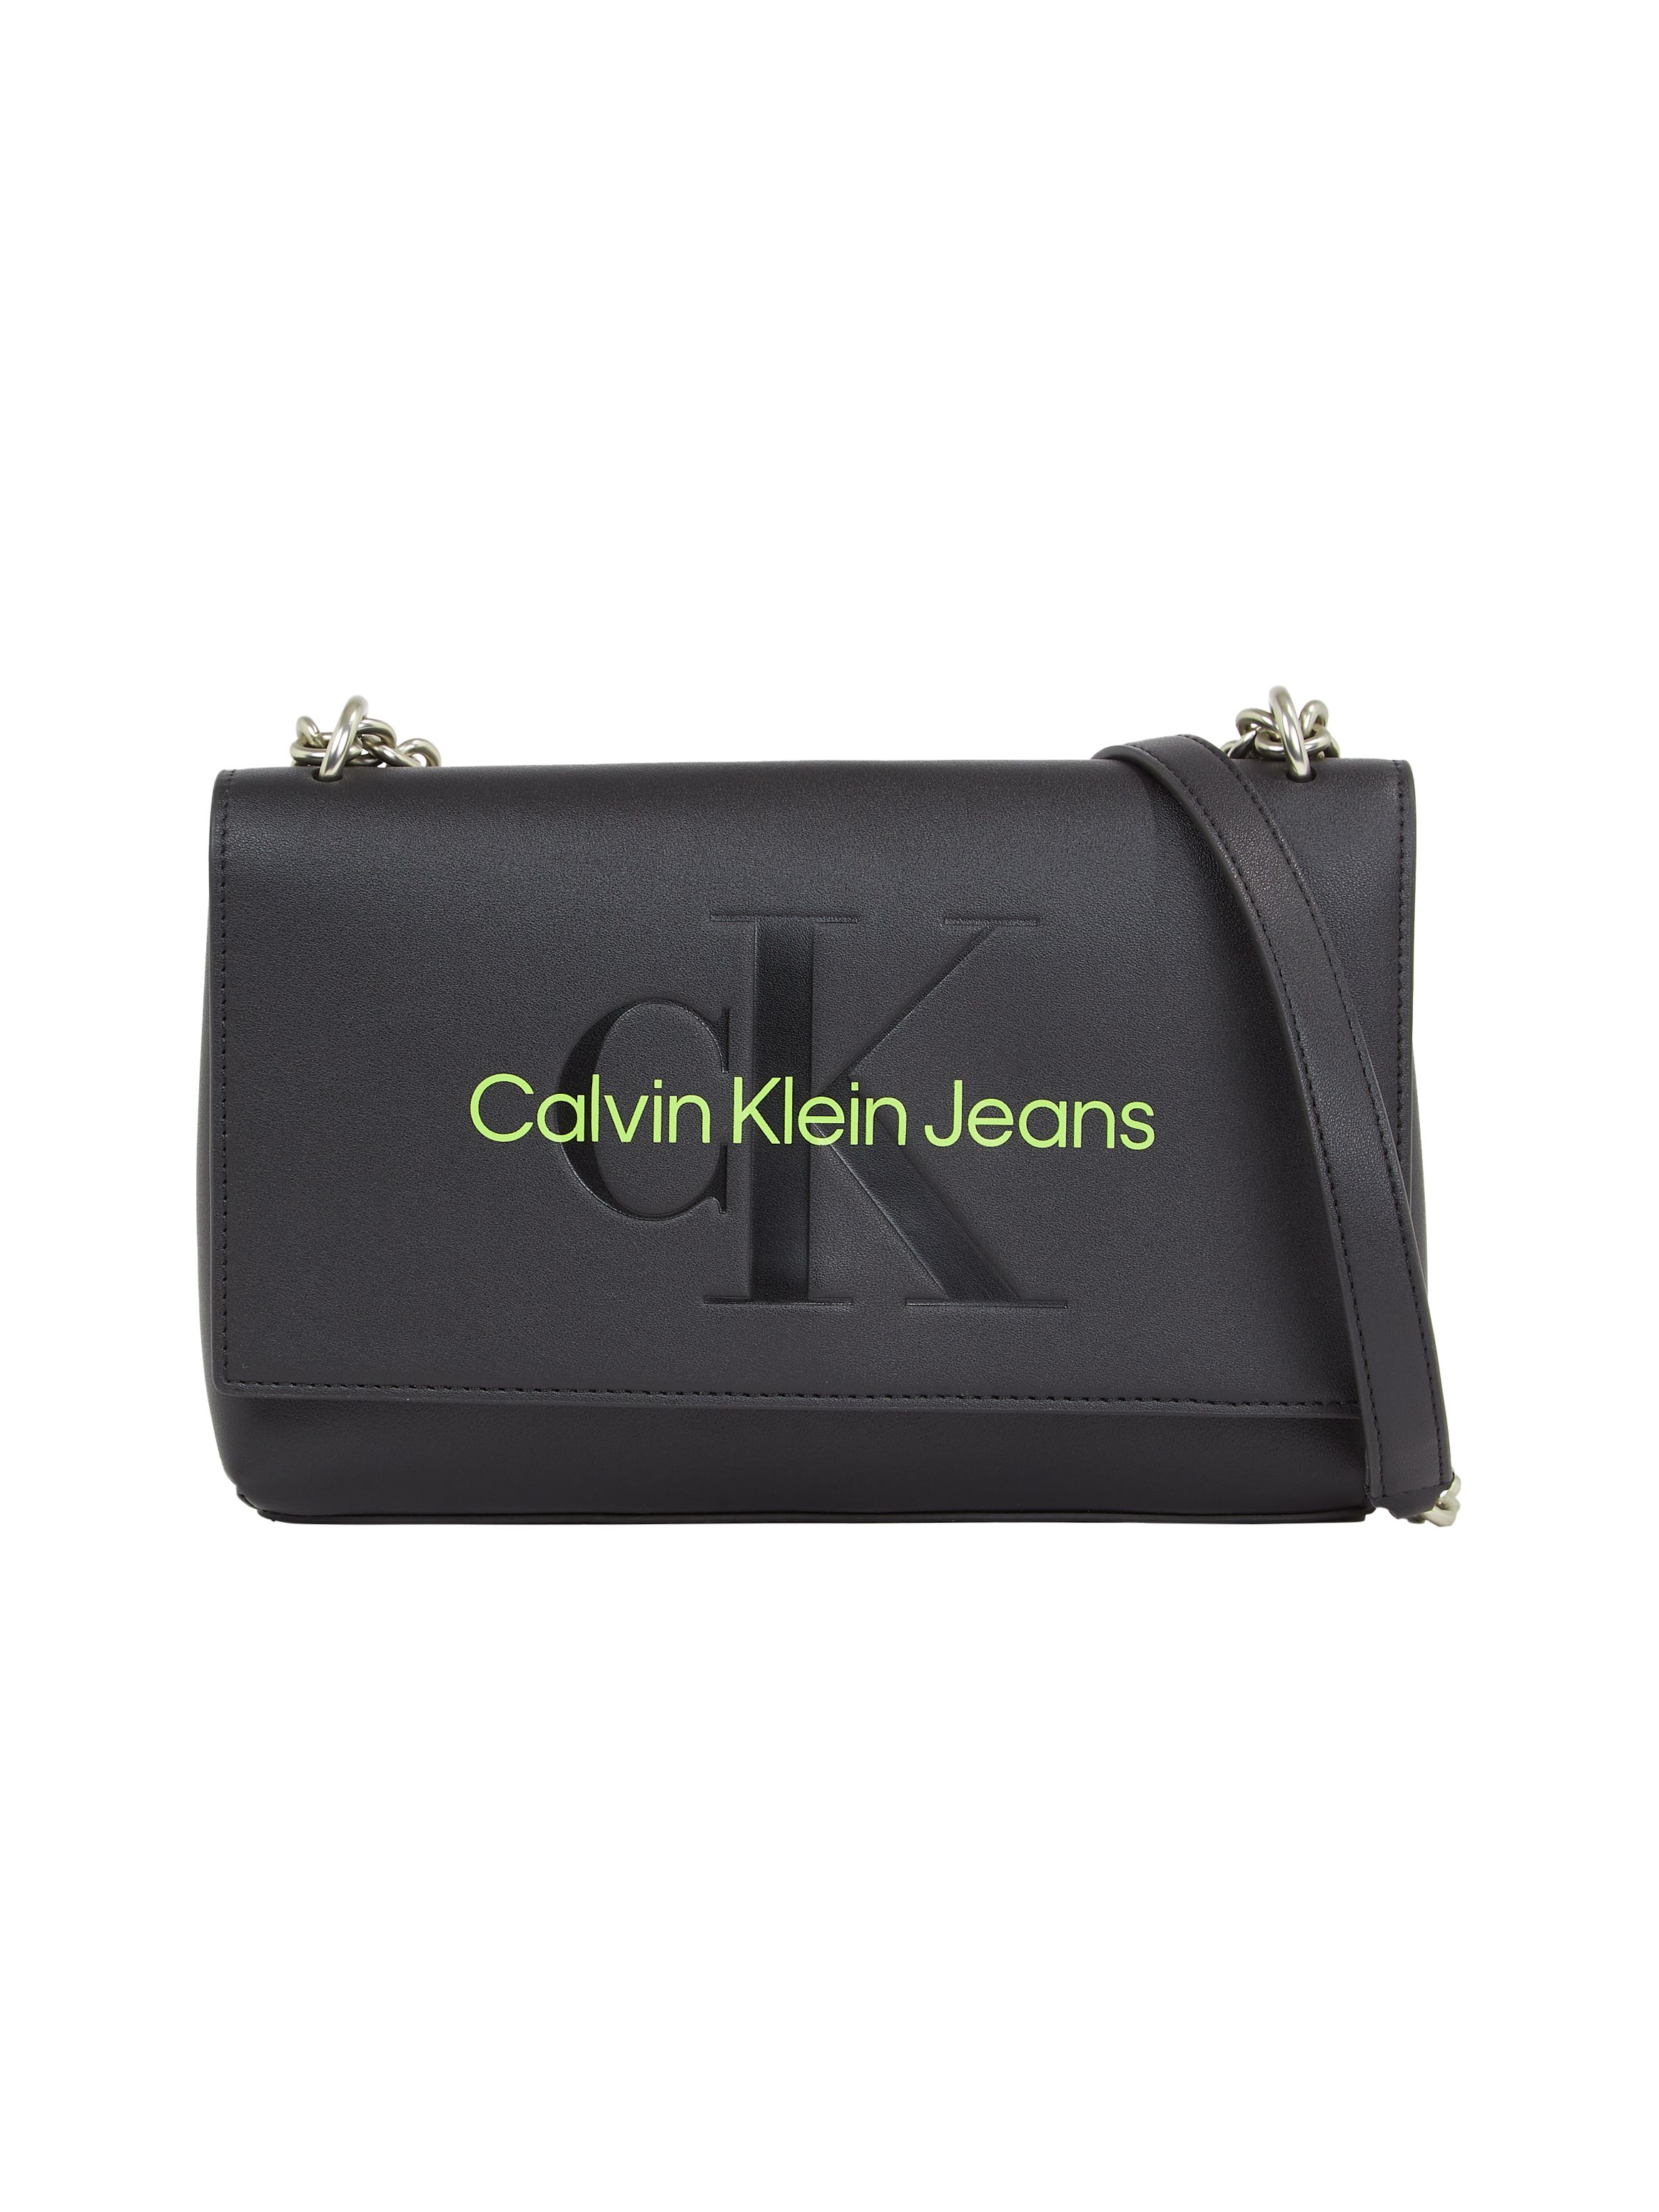 Calvin Klein Jeans Convertible Shoulder Bag